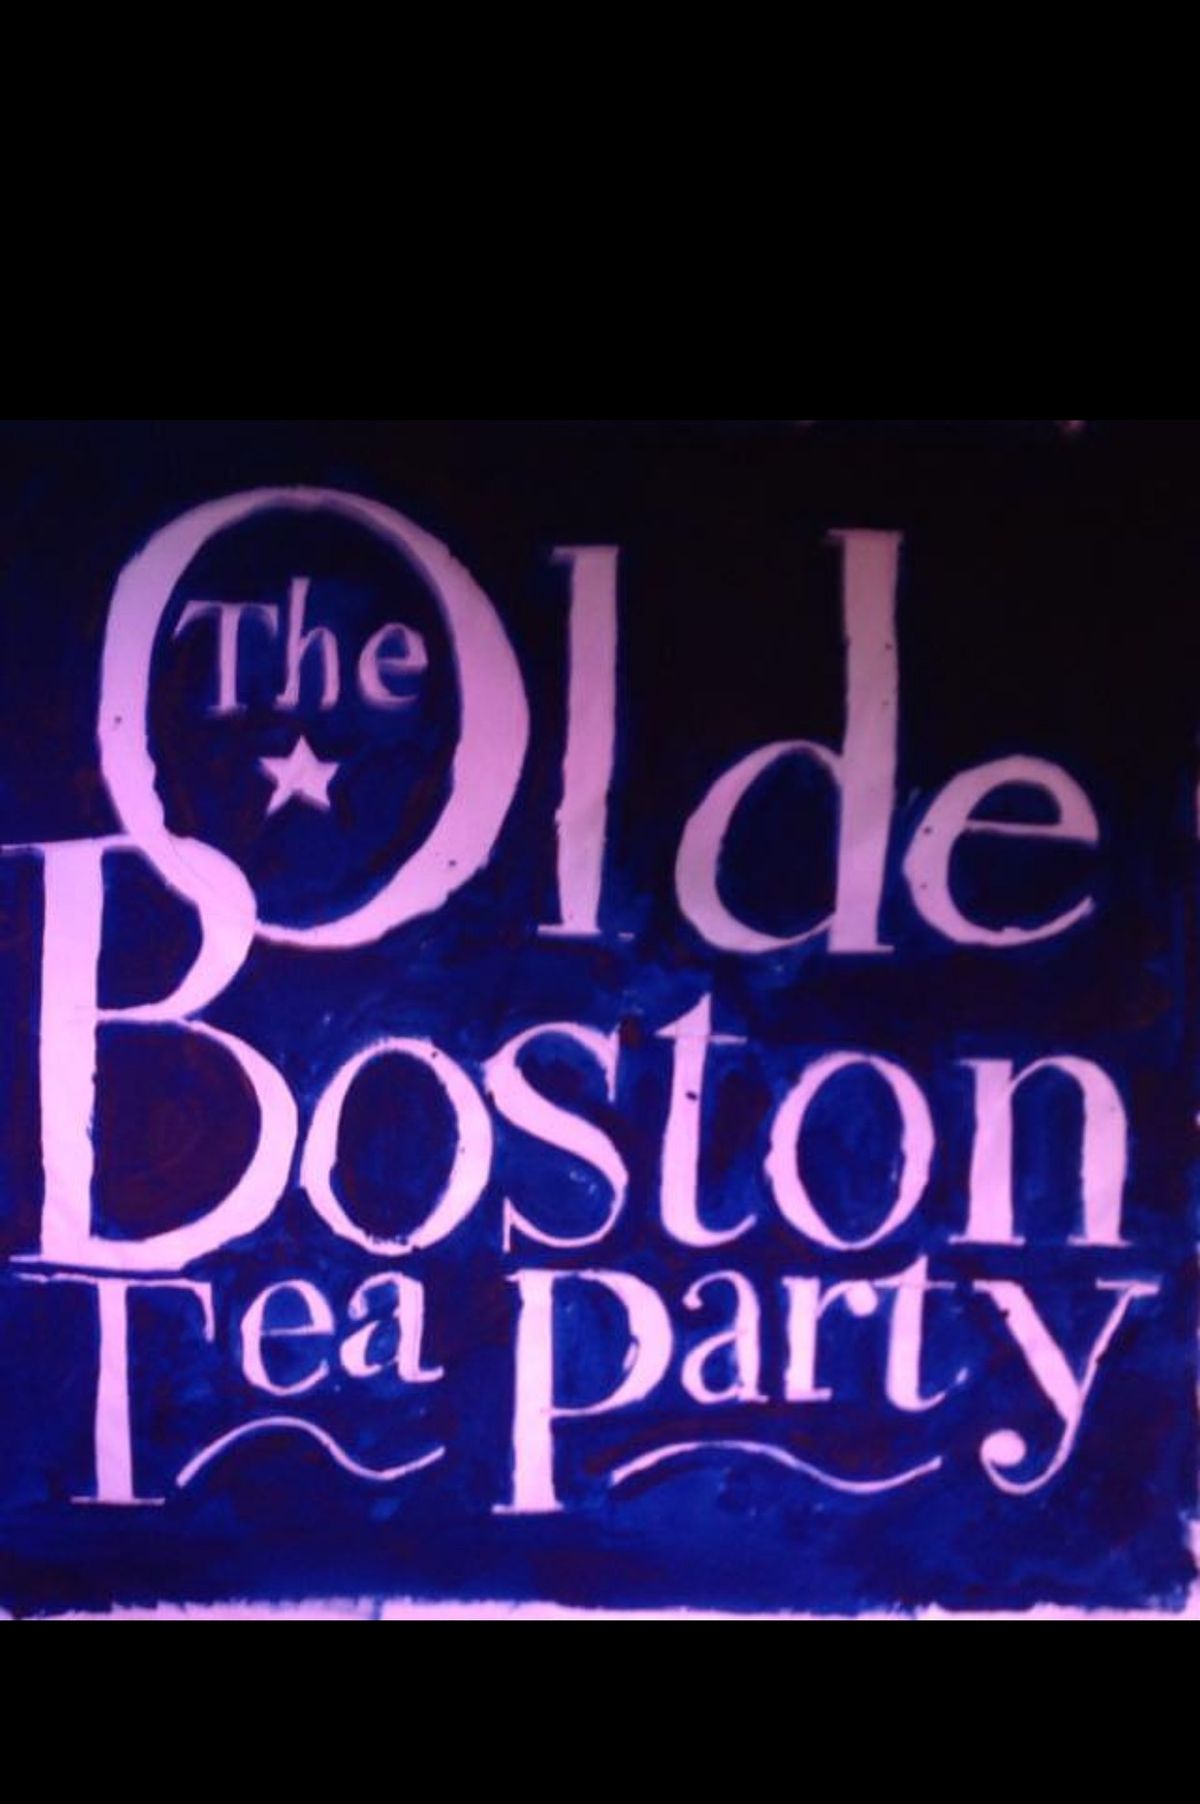 Olde Boston Tea Party - LIVE MUSIC